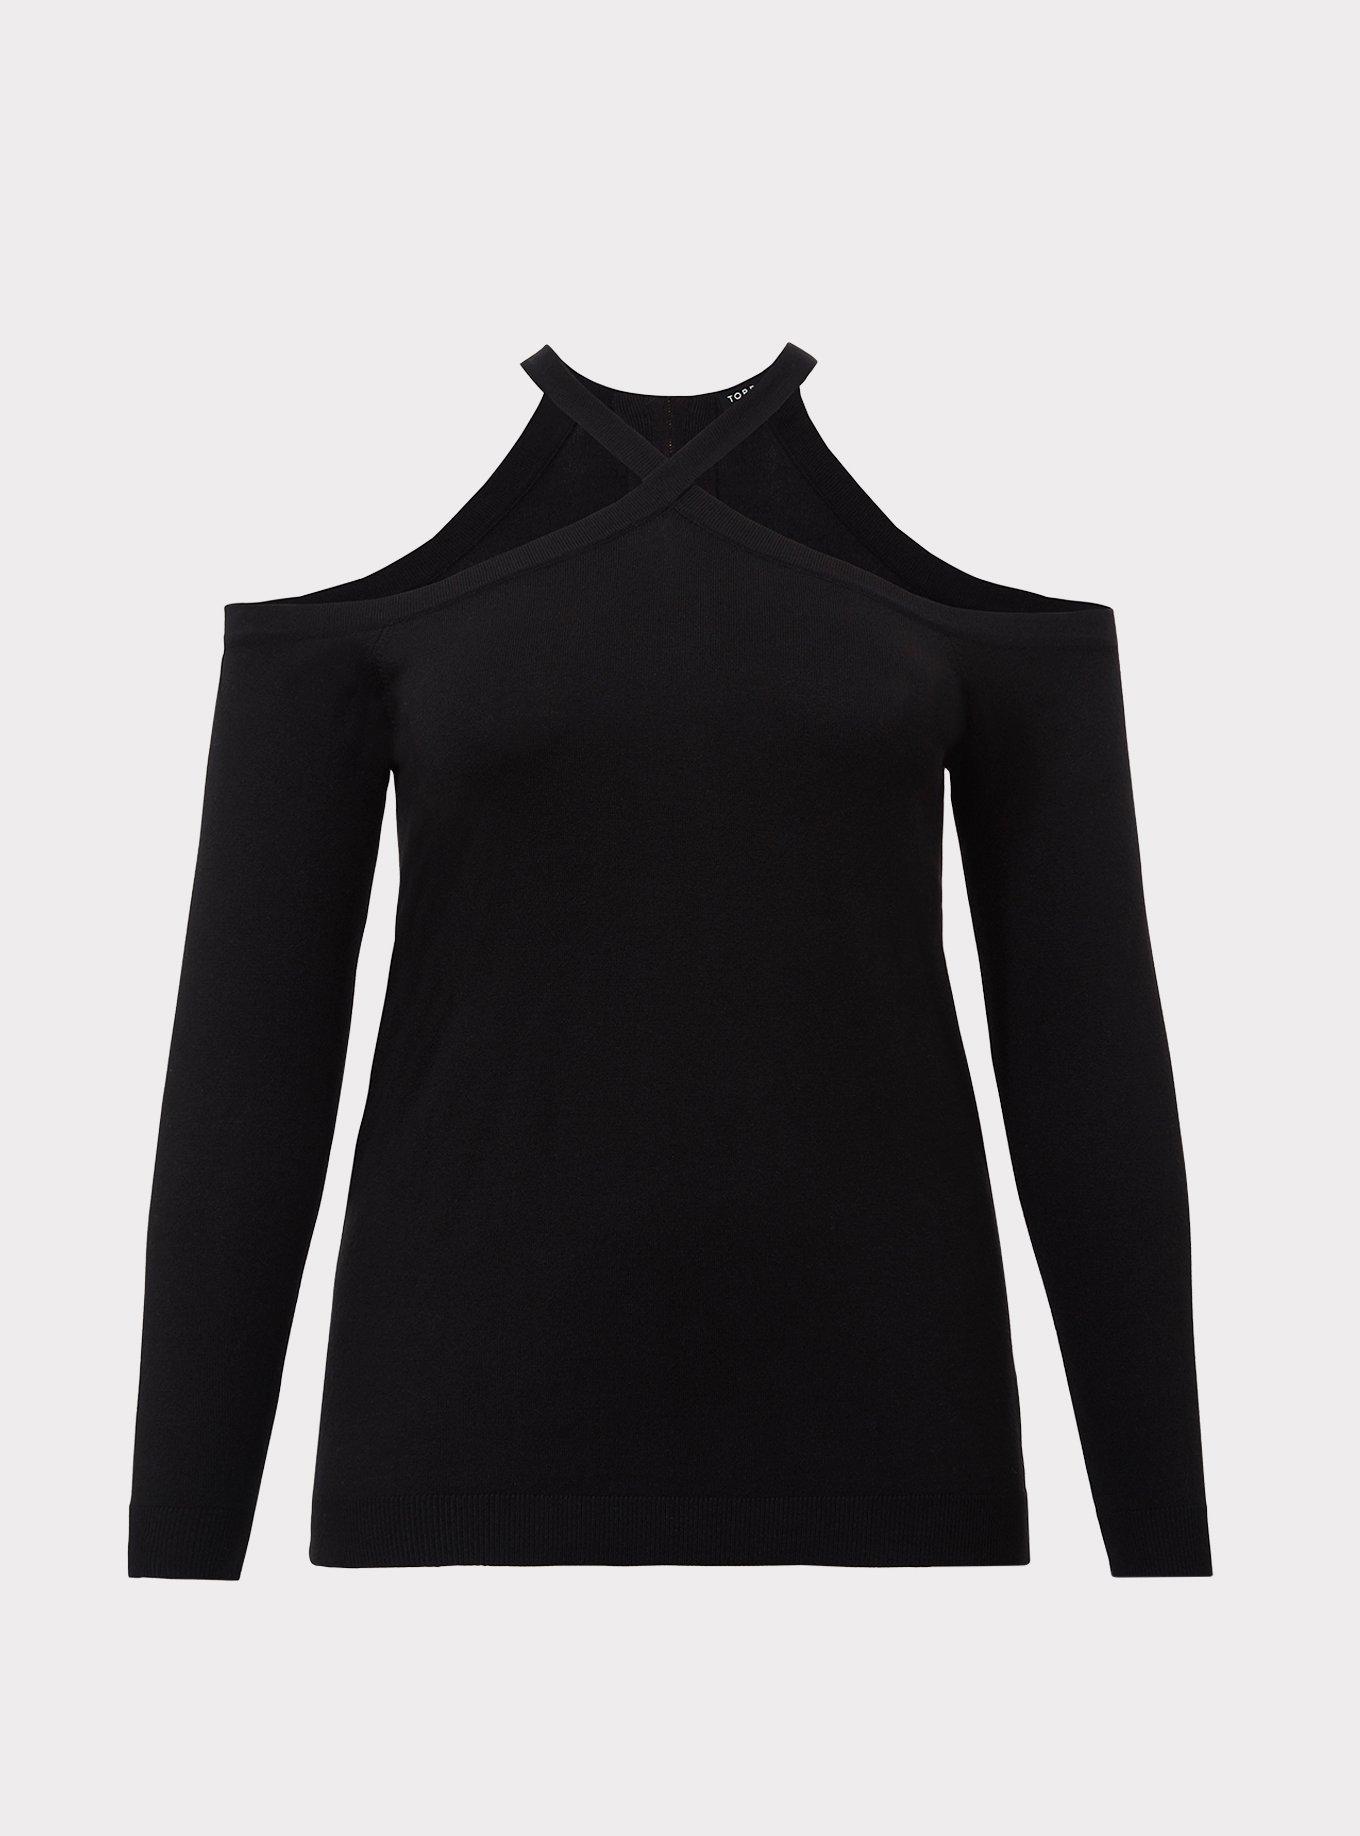 Plus Size - Black Halter Long Sleeve Sweater - Torrid